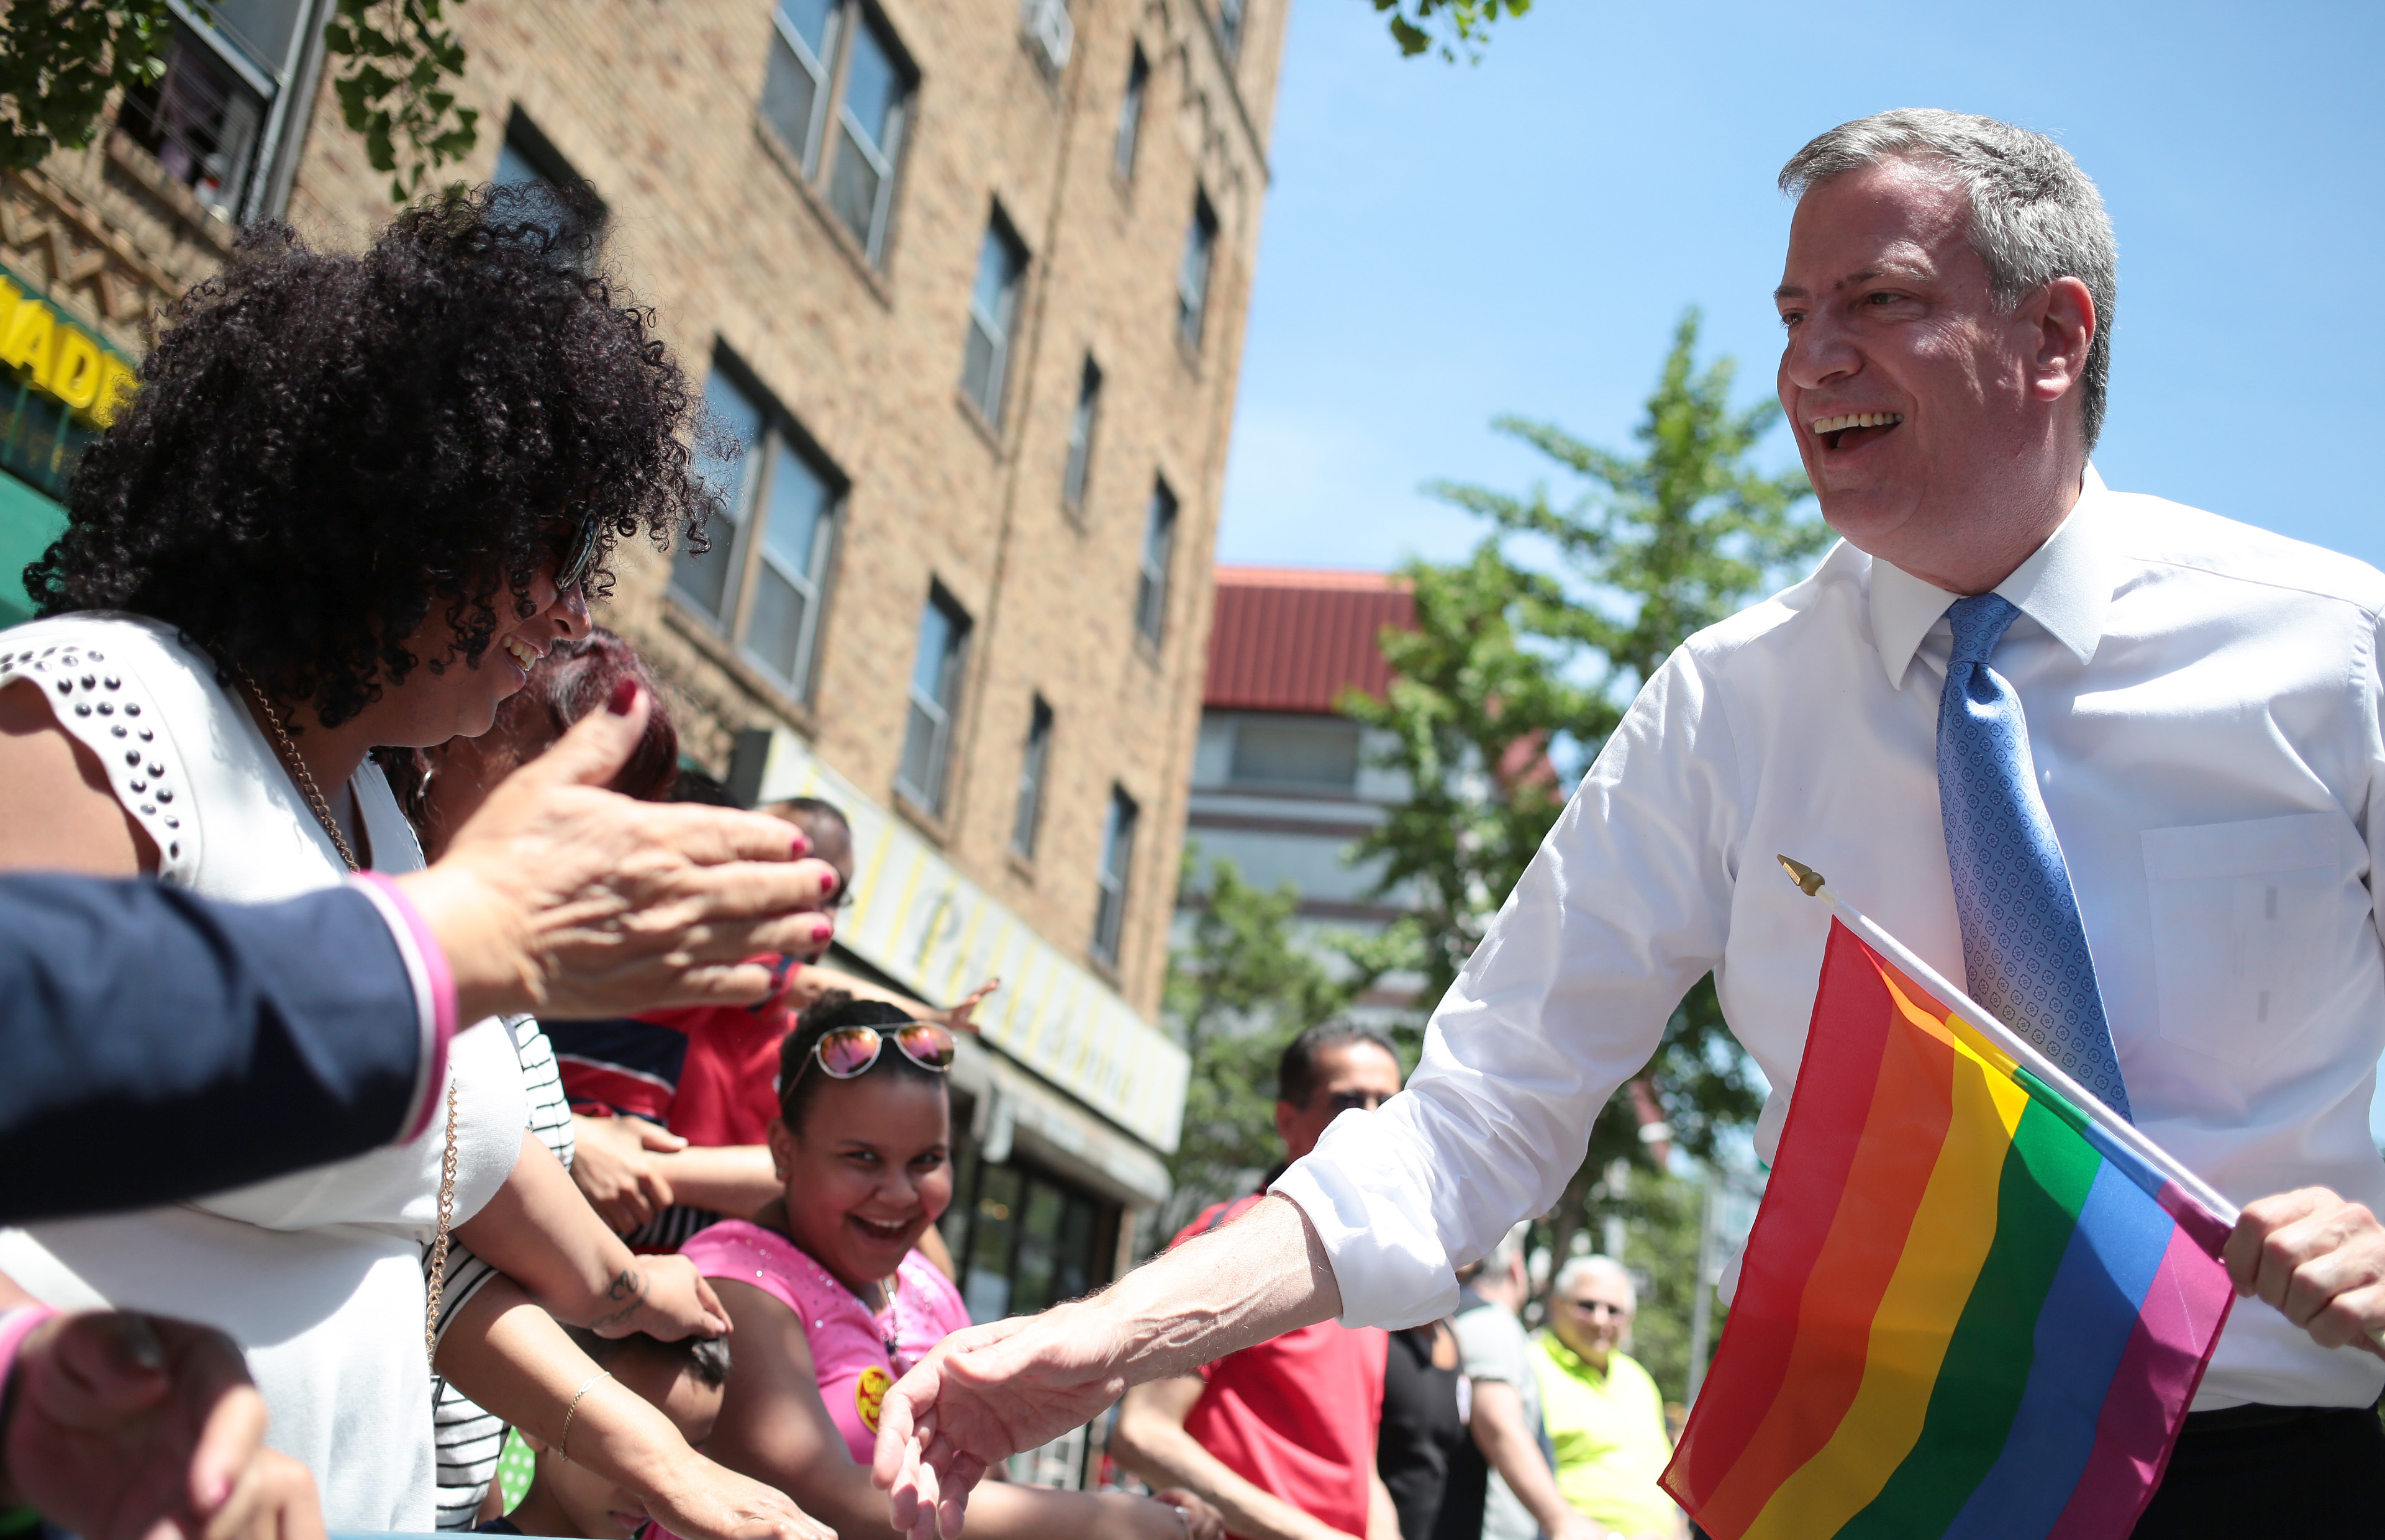 Mayor Bill de Blasio was the first mayor to march in the Queens Pride Parade in 2014.